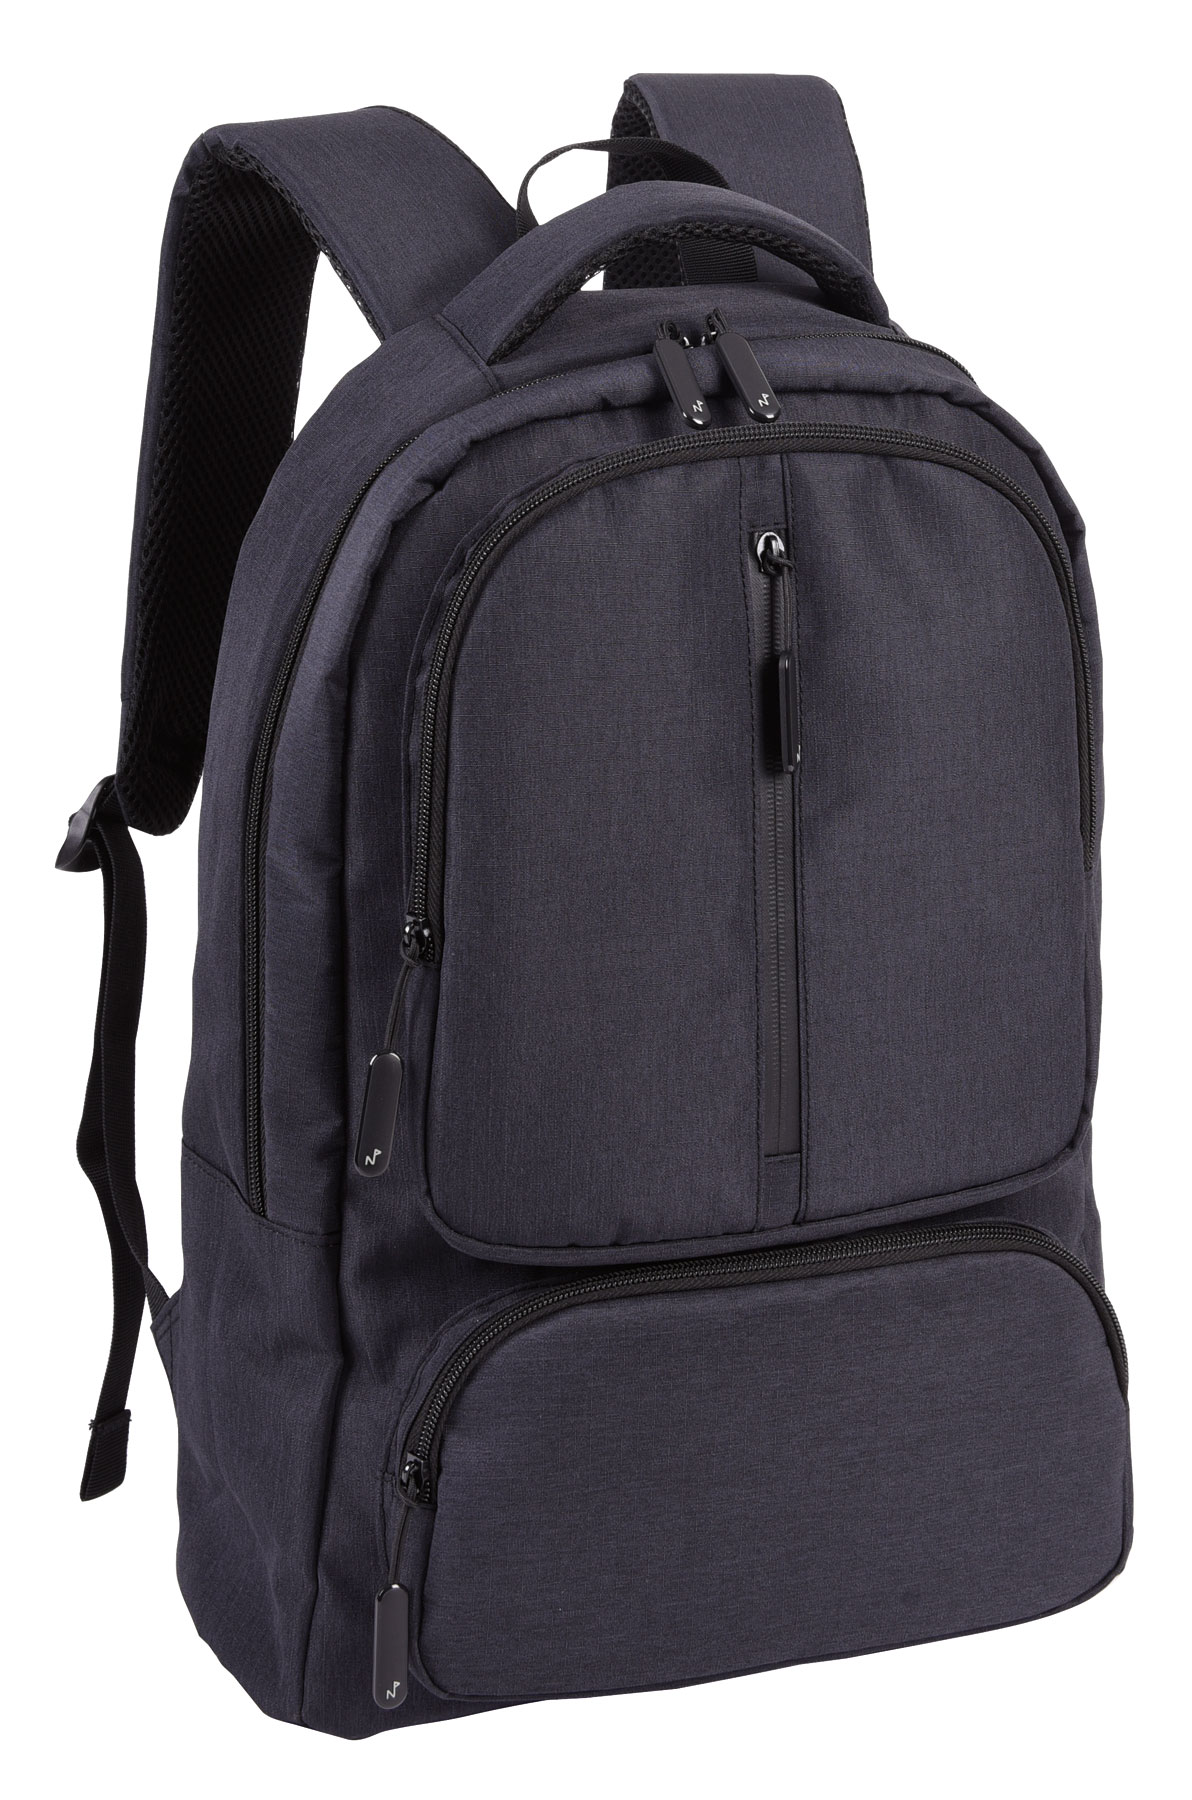 Backpack AMSTERDAM - black